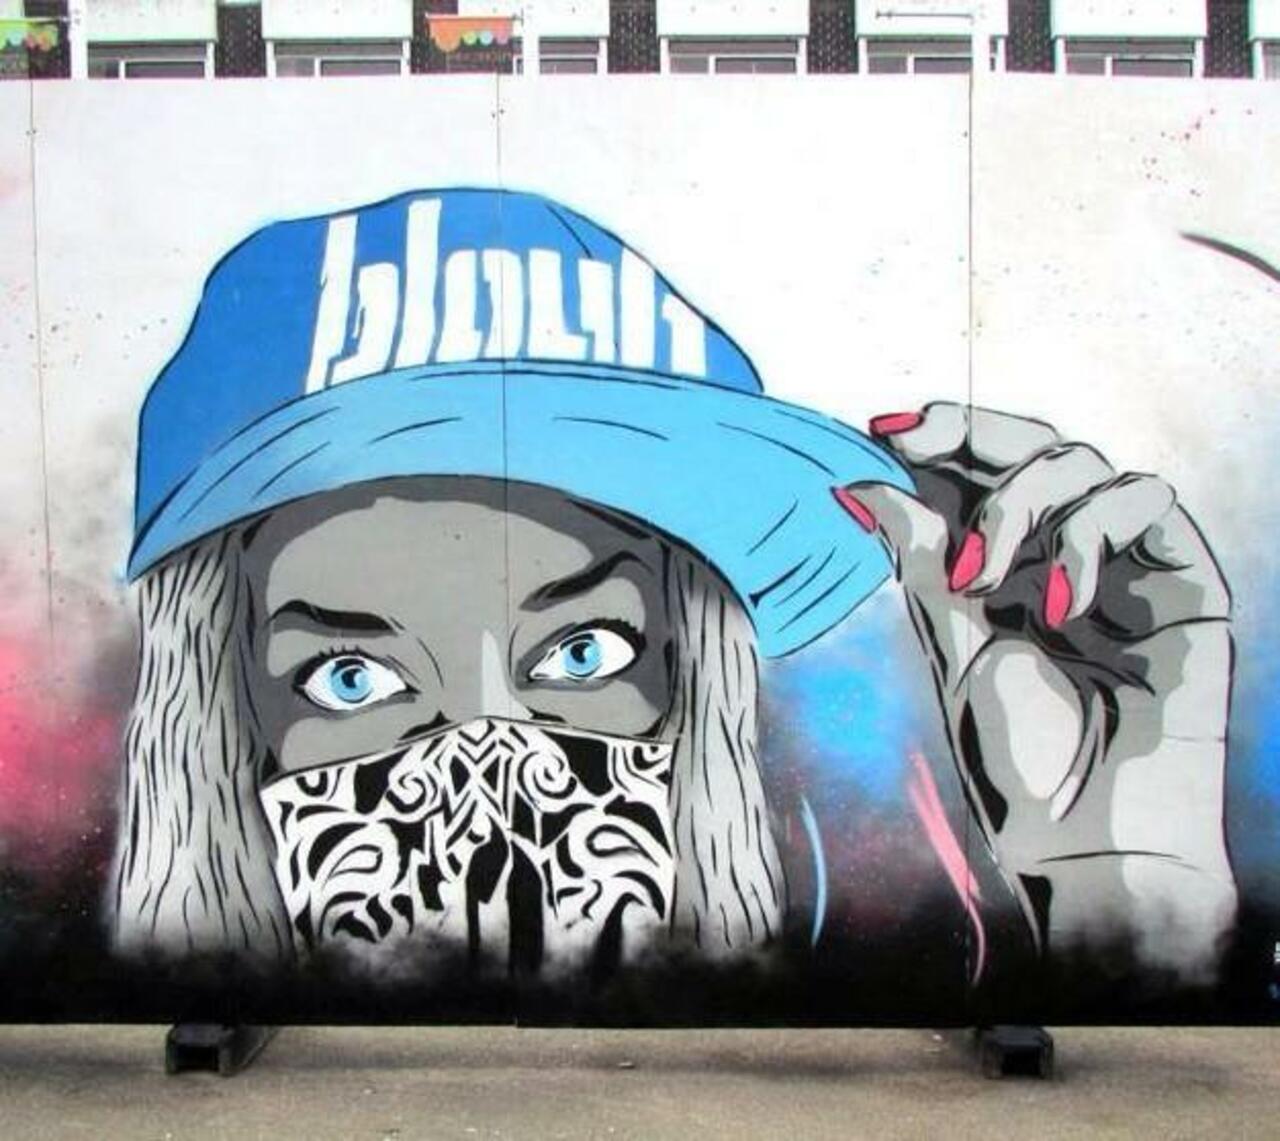 Artist Blouh at the Glouchester Paint Jamb, London, UK #art #mural #graffiti #streetart http://t.co/ljTw8W2UYe